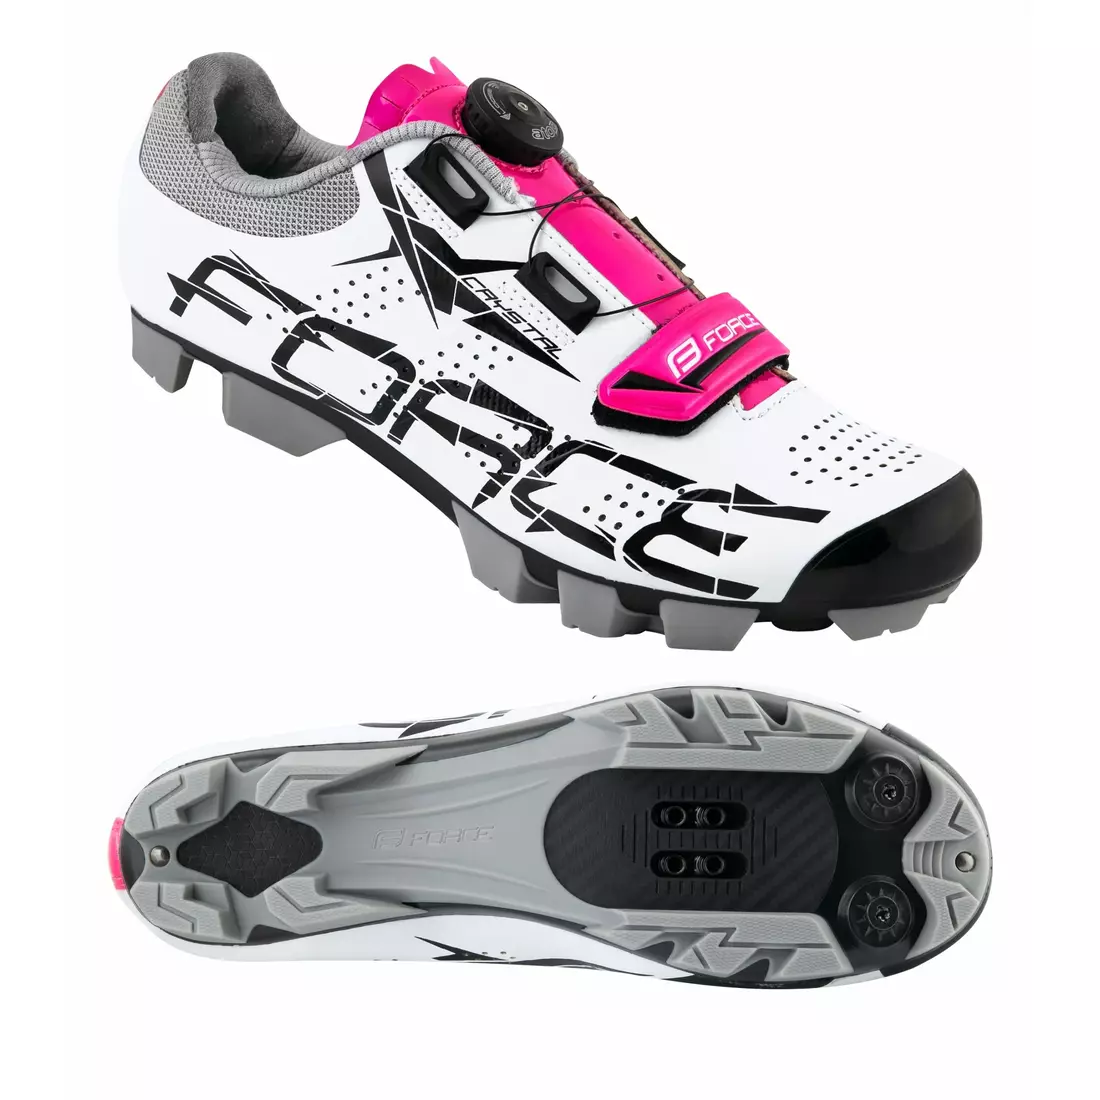 FORCE MTB CRYSTAL dámska cyklistická obuv biela a ružová 9407238